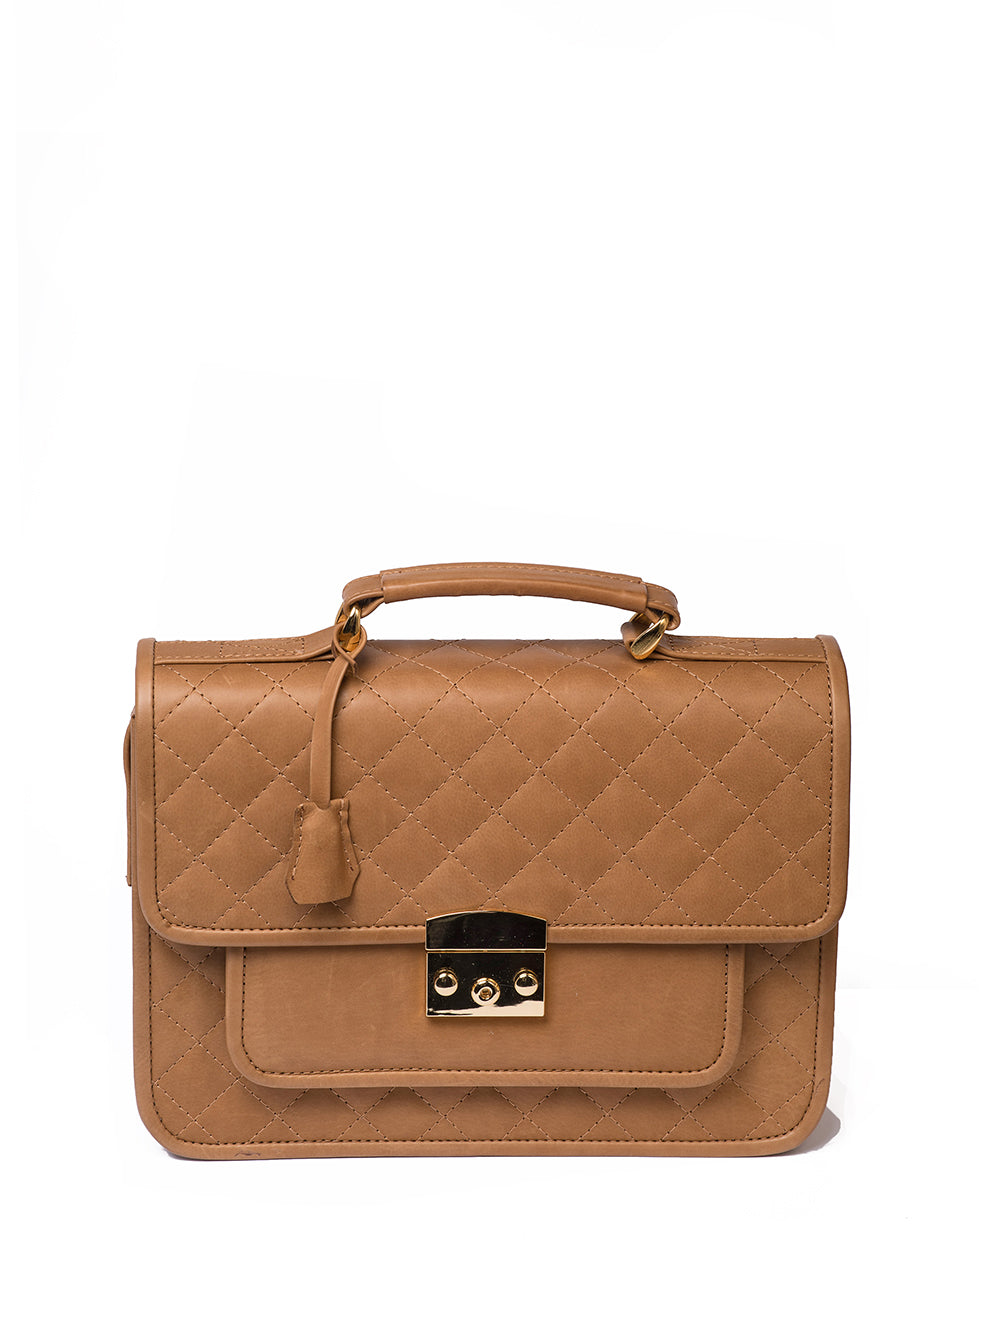 Quilted leather satchel bag - Camel